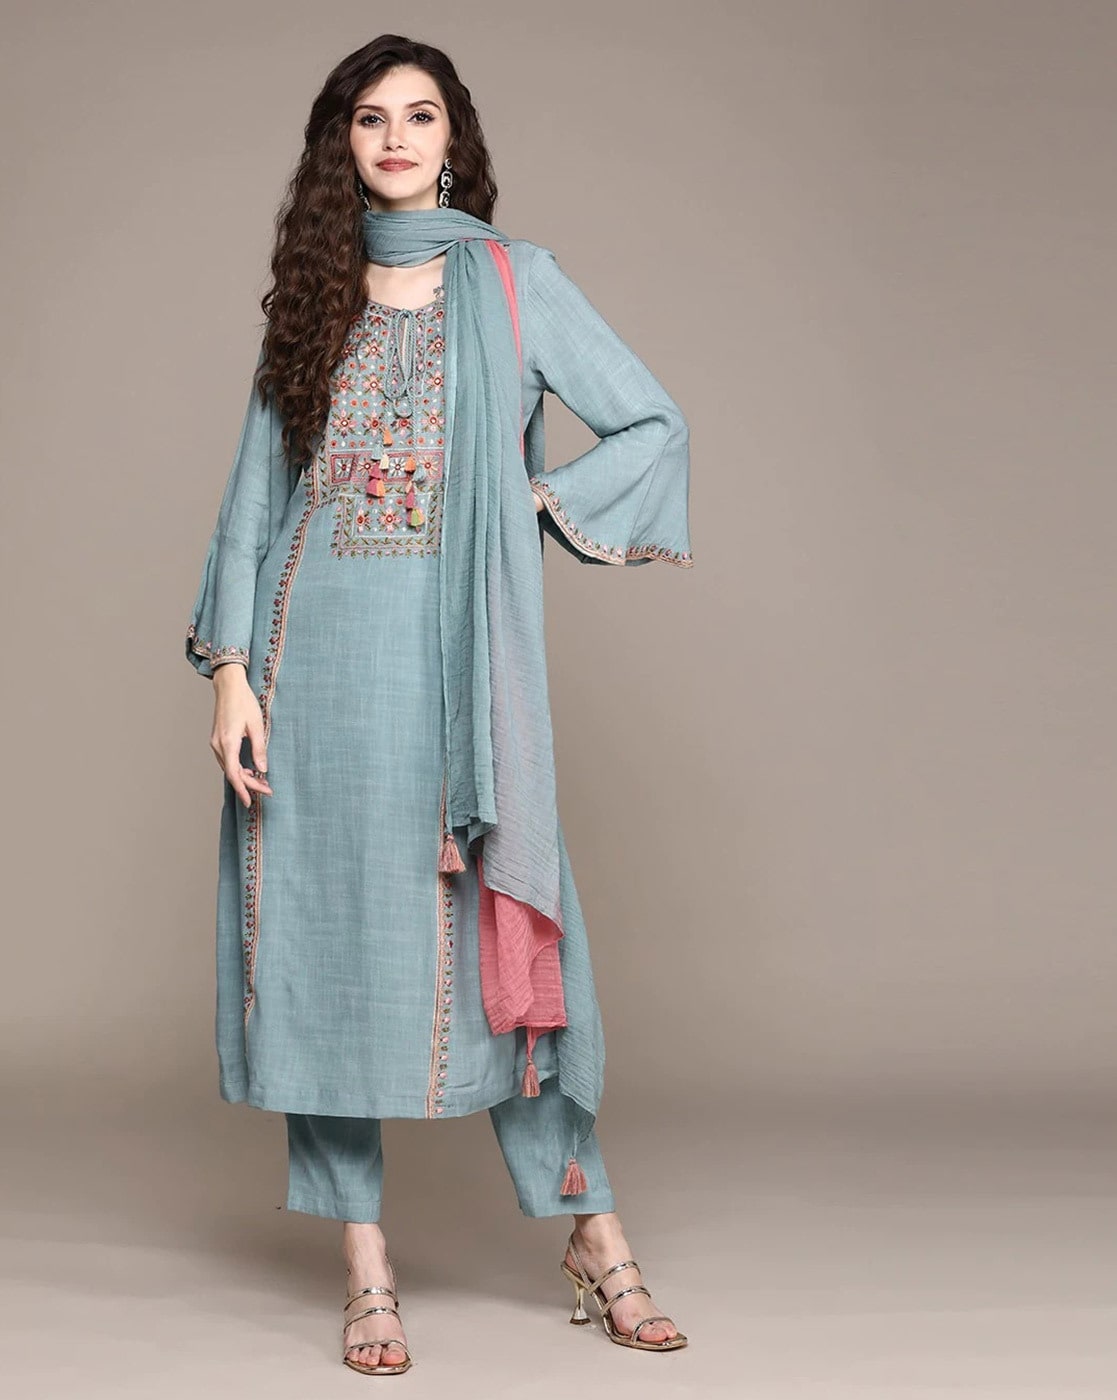 45 Latest Net Kurta Designs for Women Trending in 2022 - Tips and Beauty |  Kurta designs, Indian women fashion, Stylish party dresses